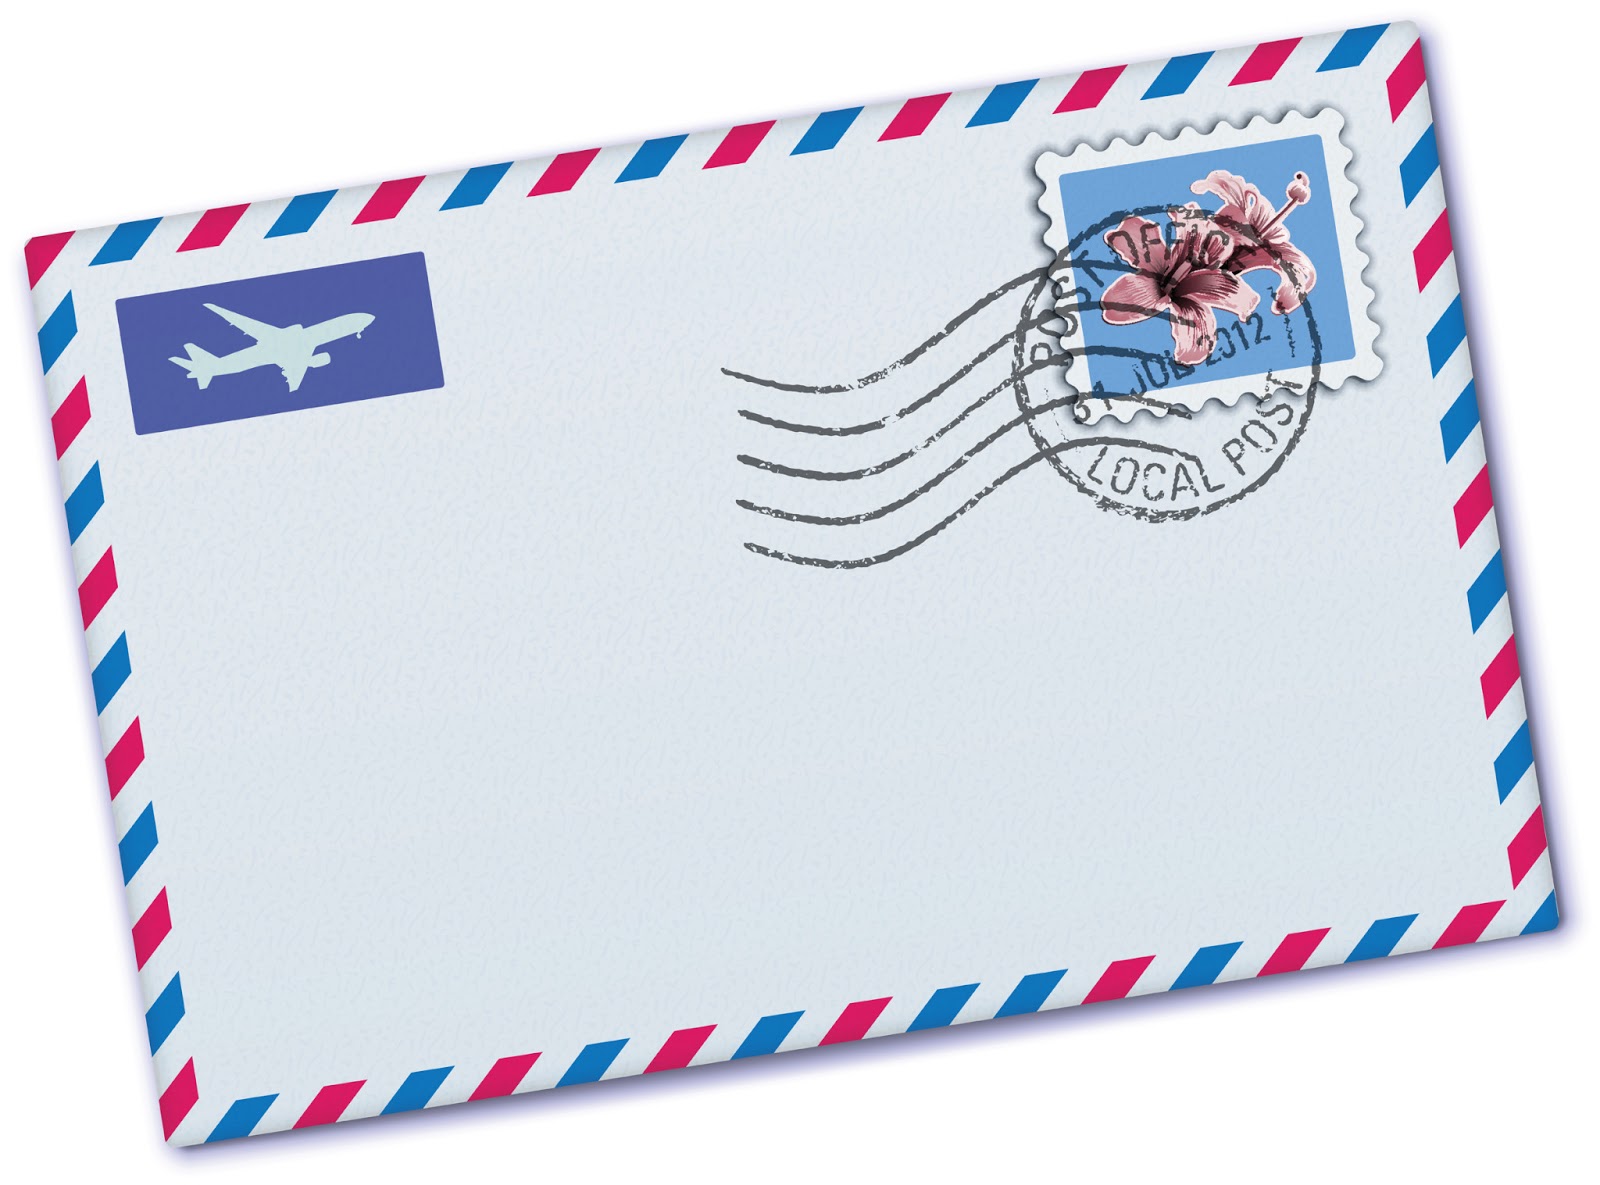 mailing-envelope